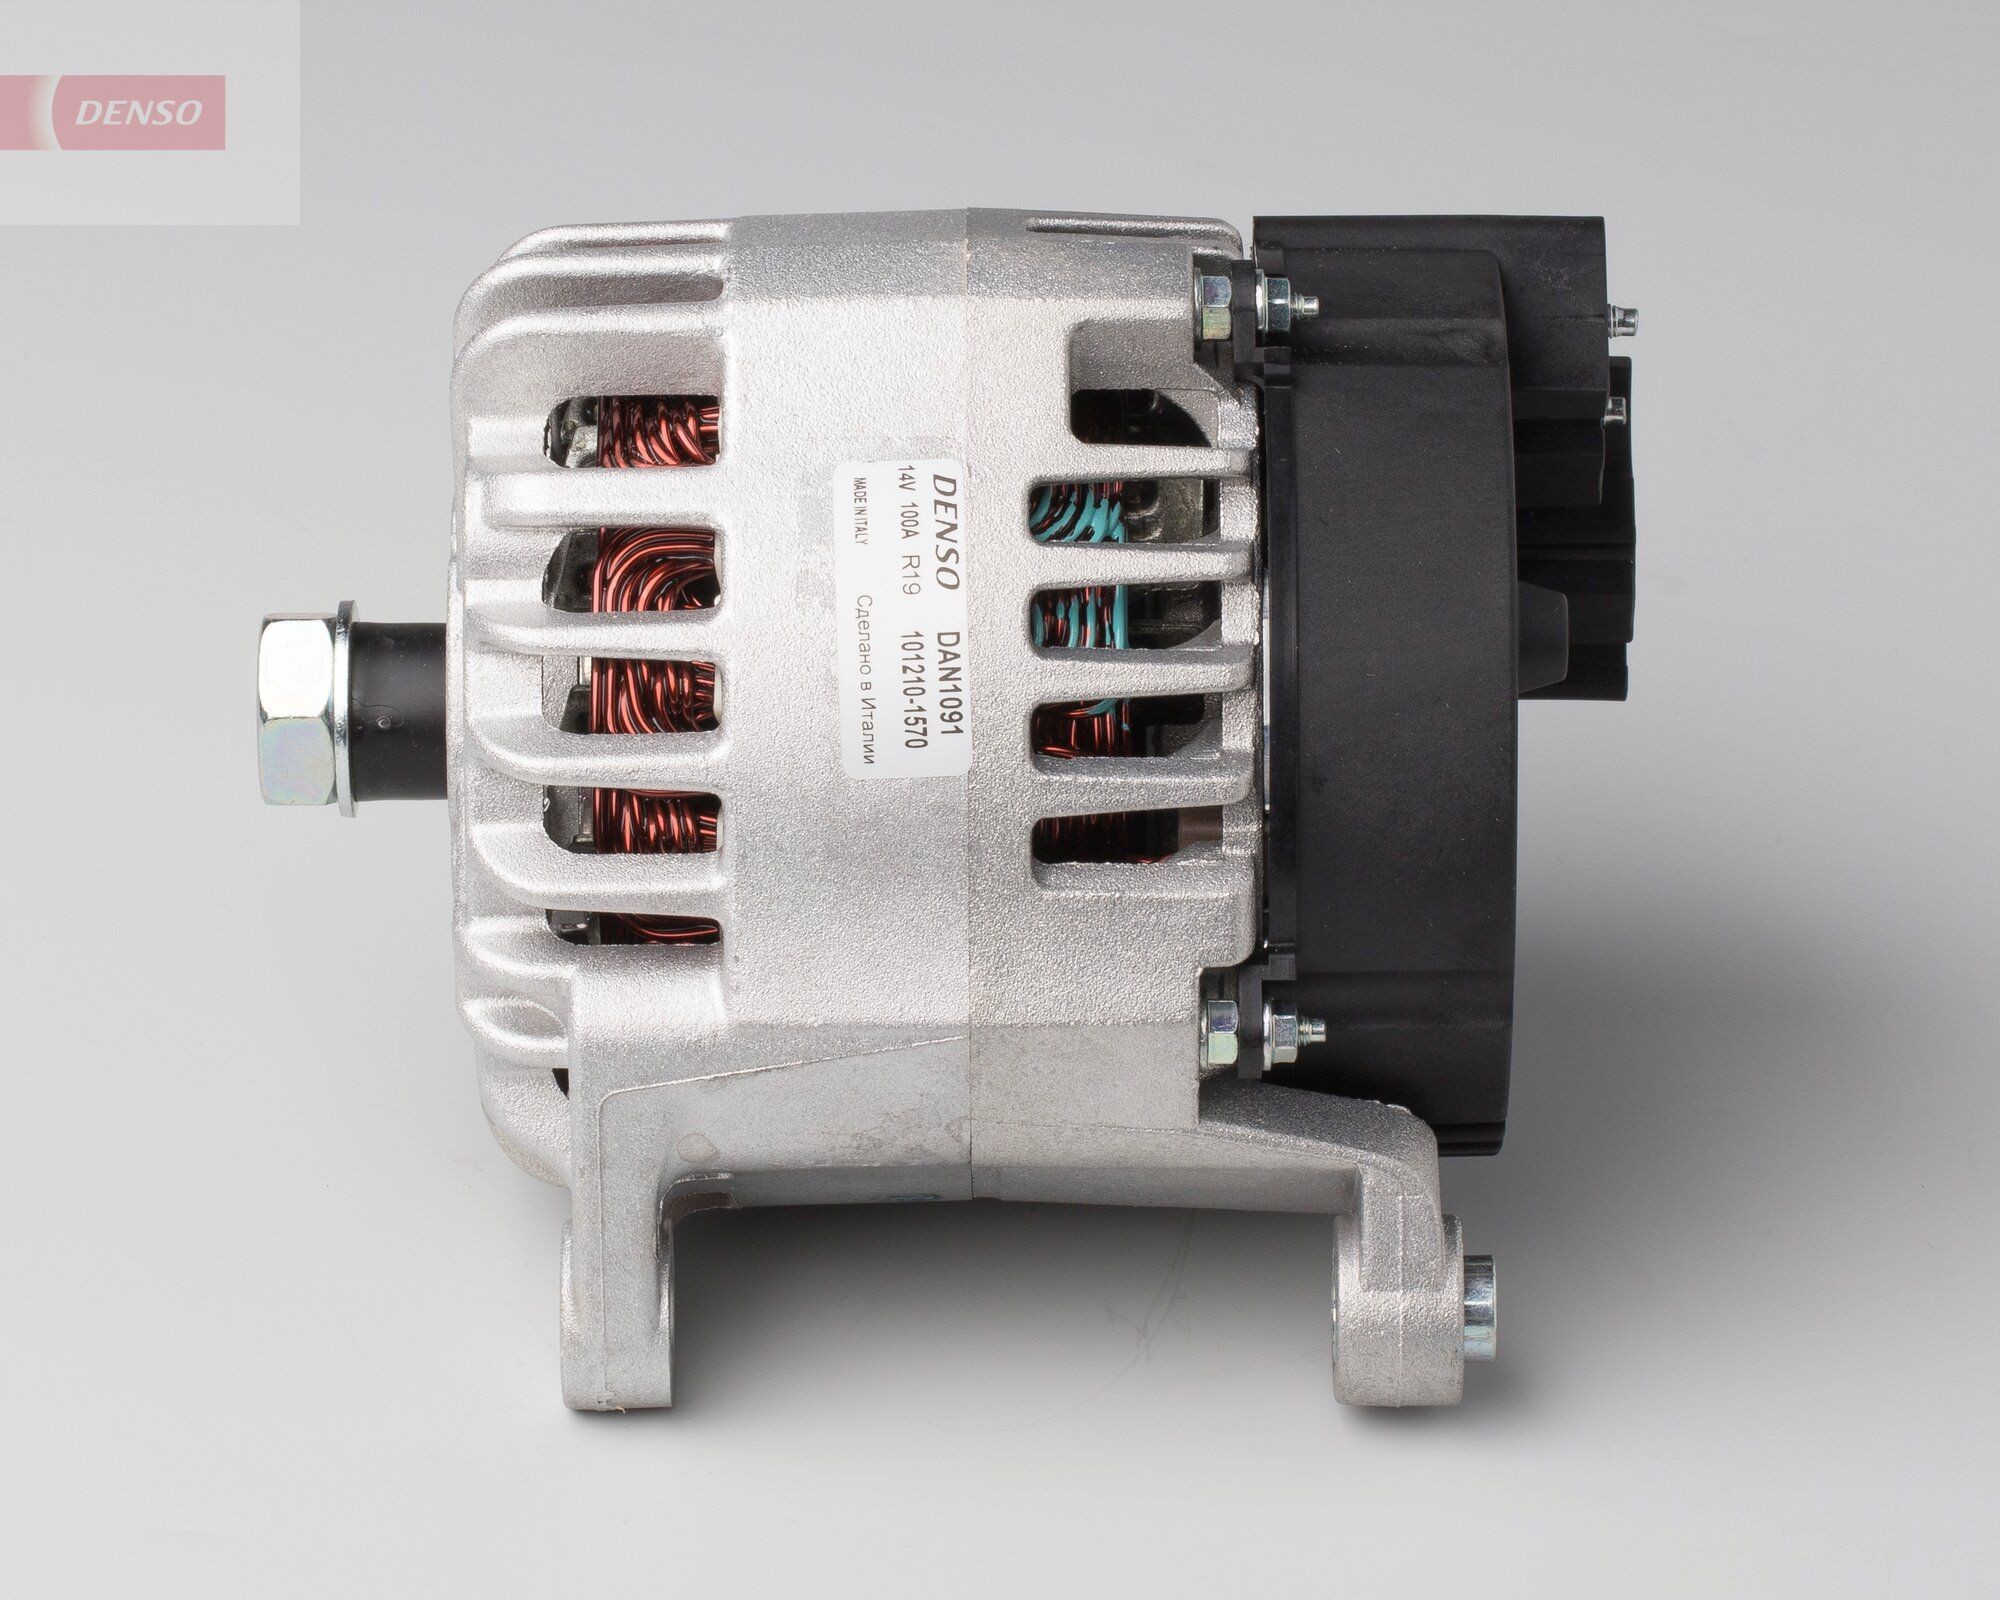 DENSO 14V, 100A Generator DAN1091 buy